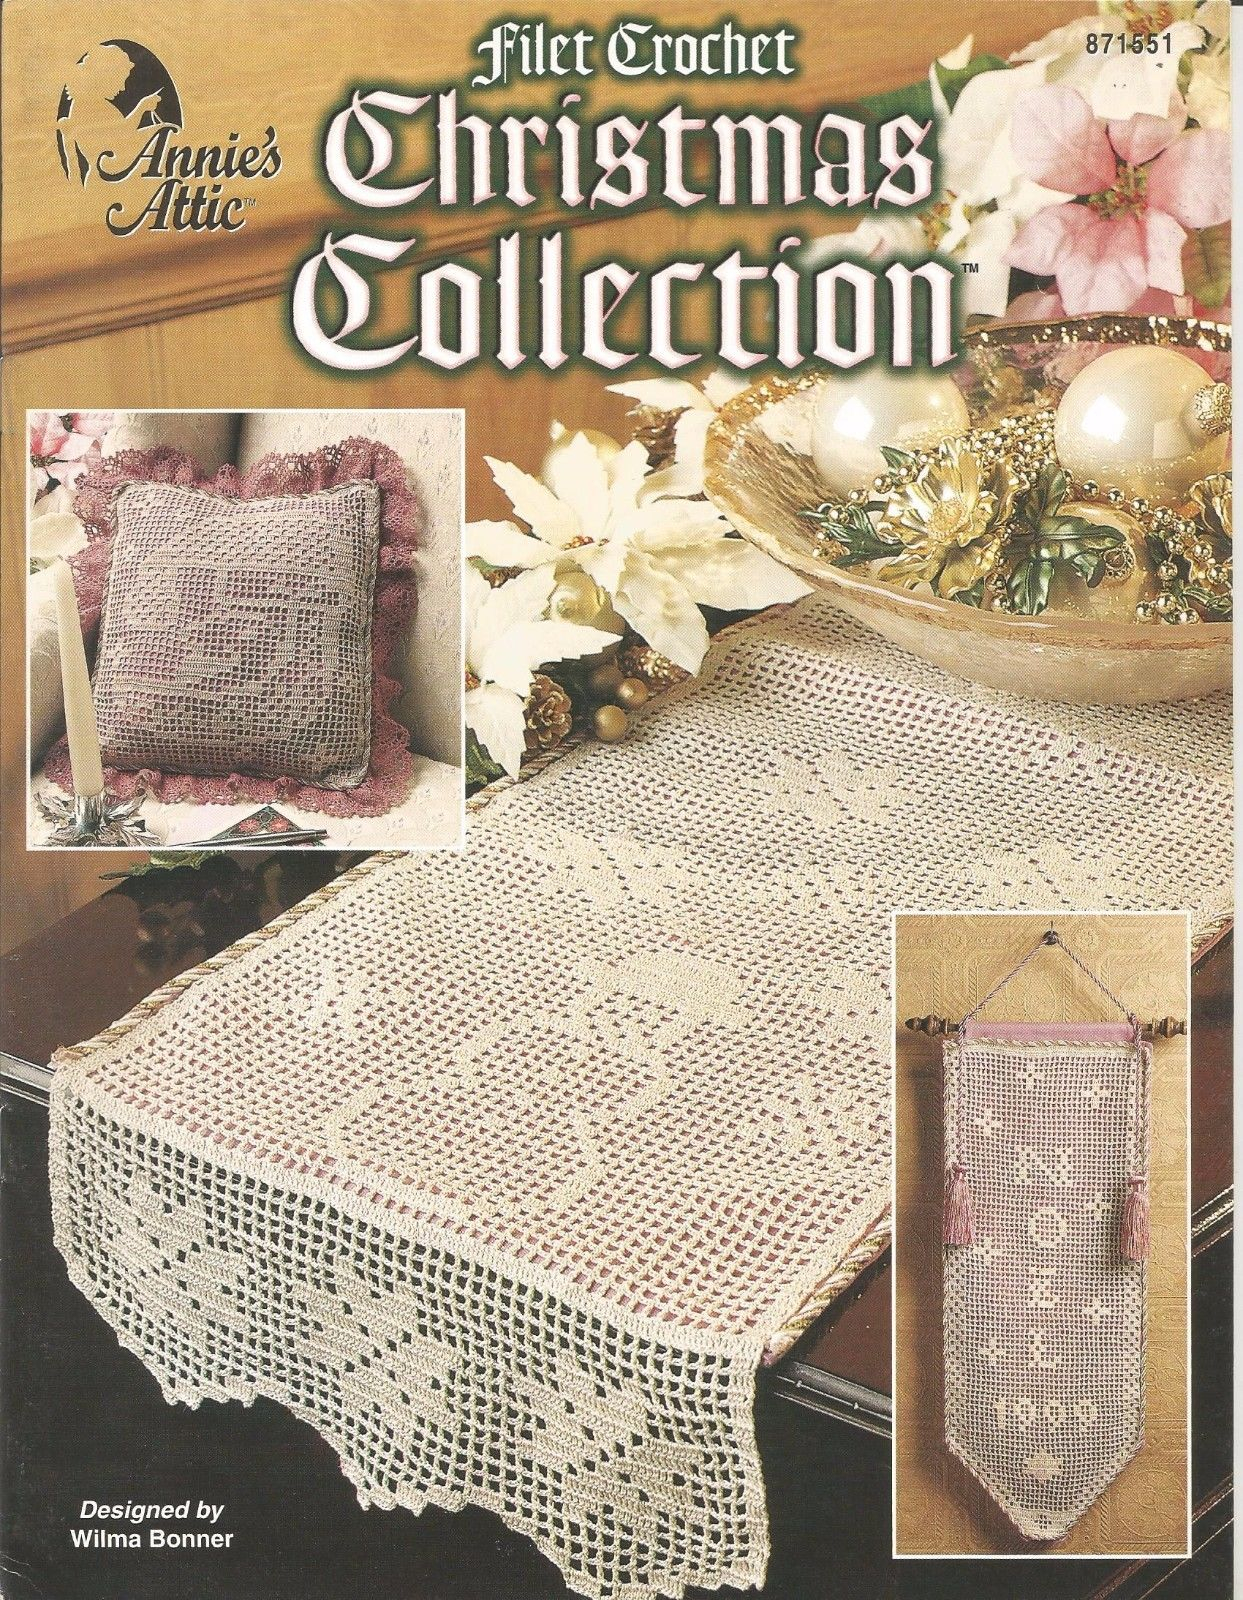 Christmas Filet Crochet Patterns 1999 Annies Attic Filet Crochet Christmas Collection For Sale